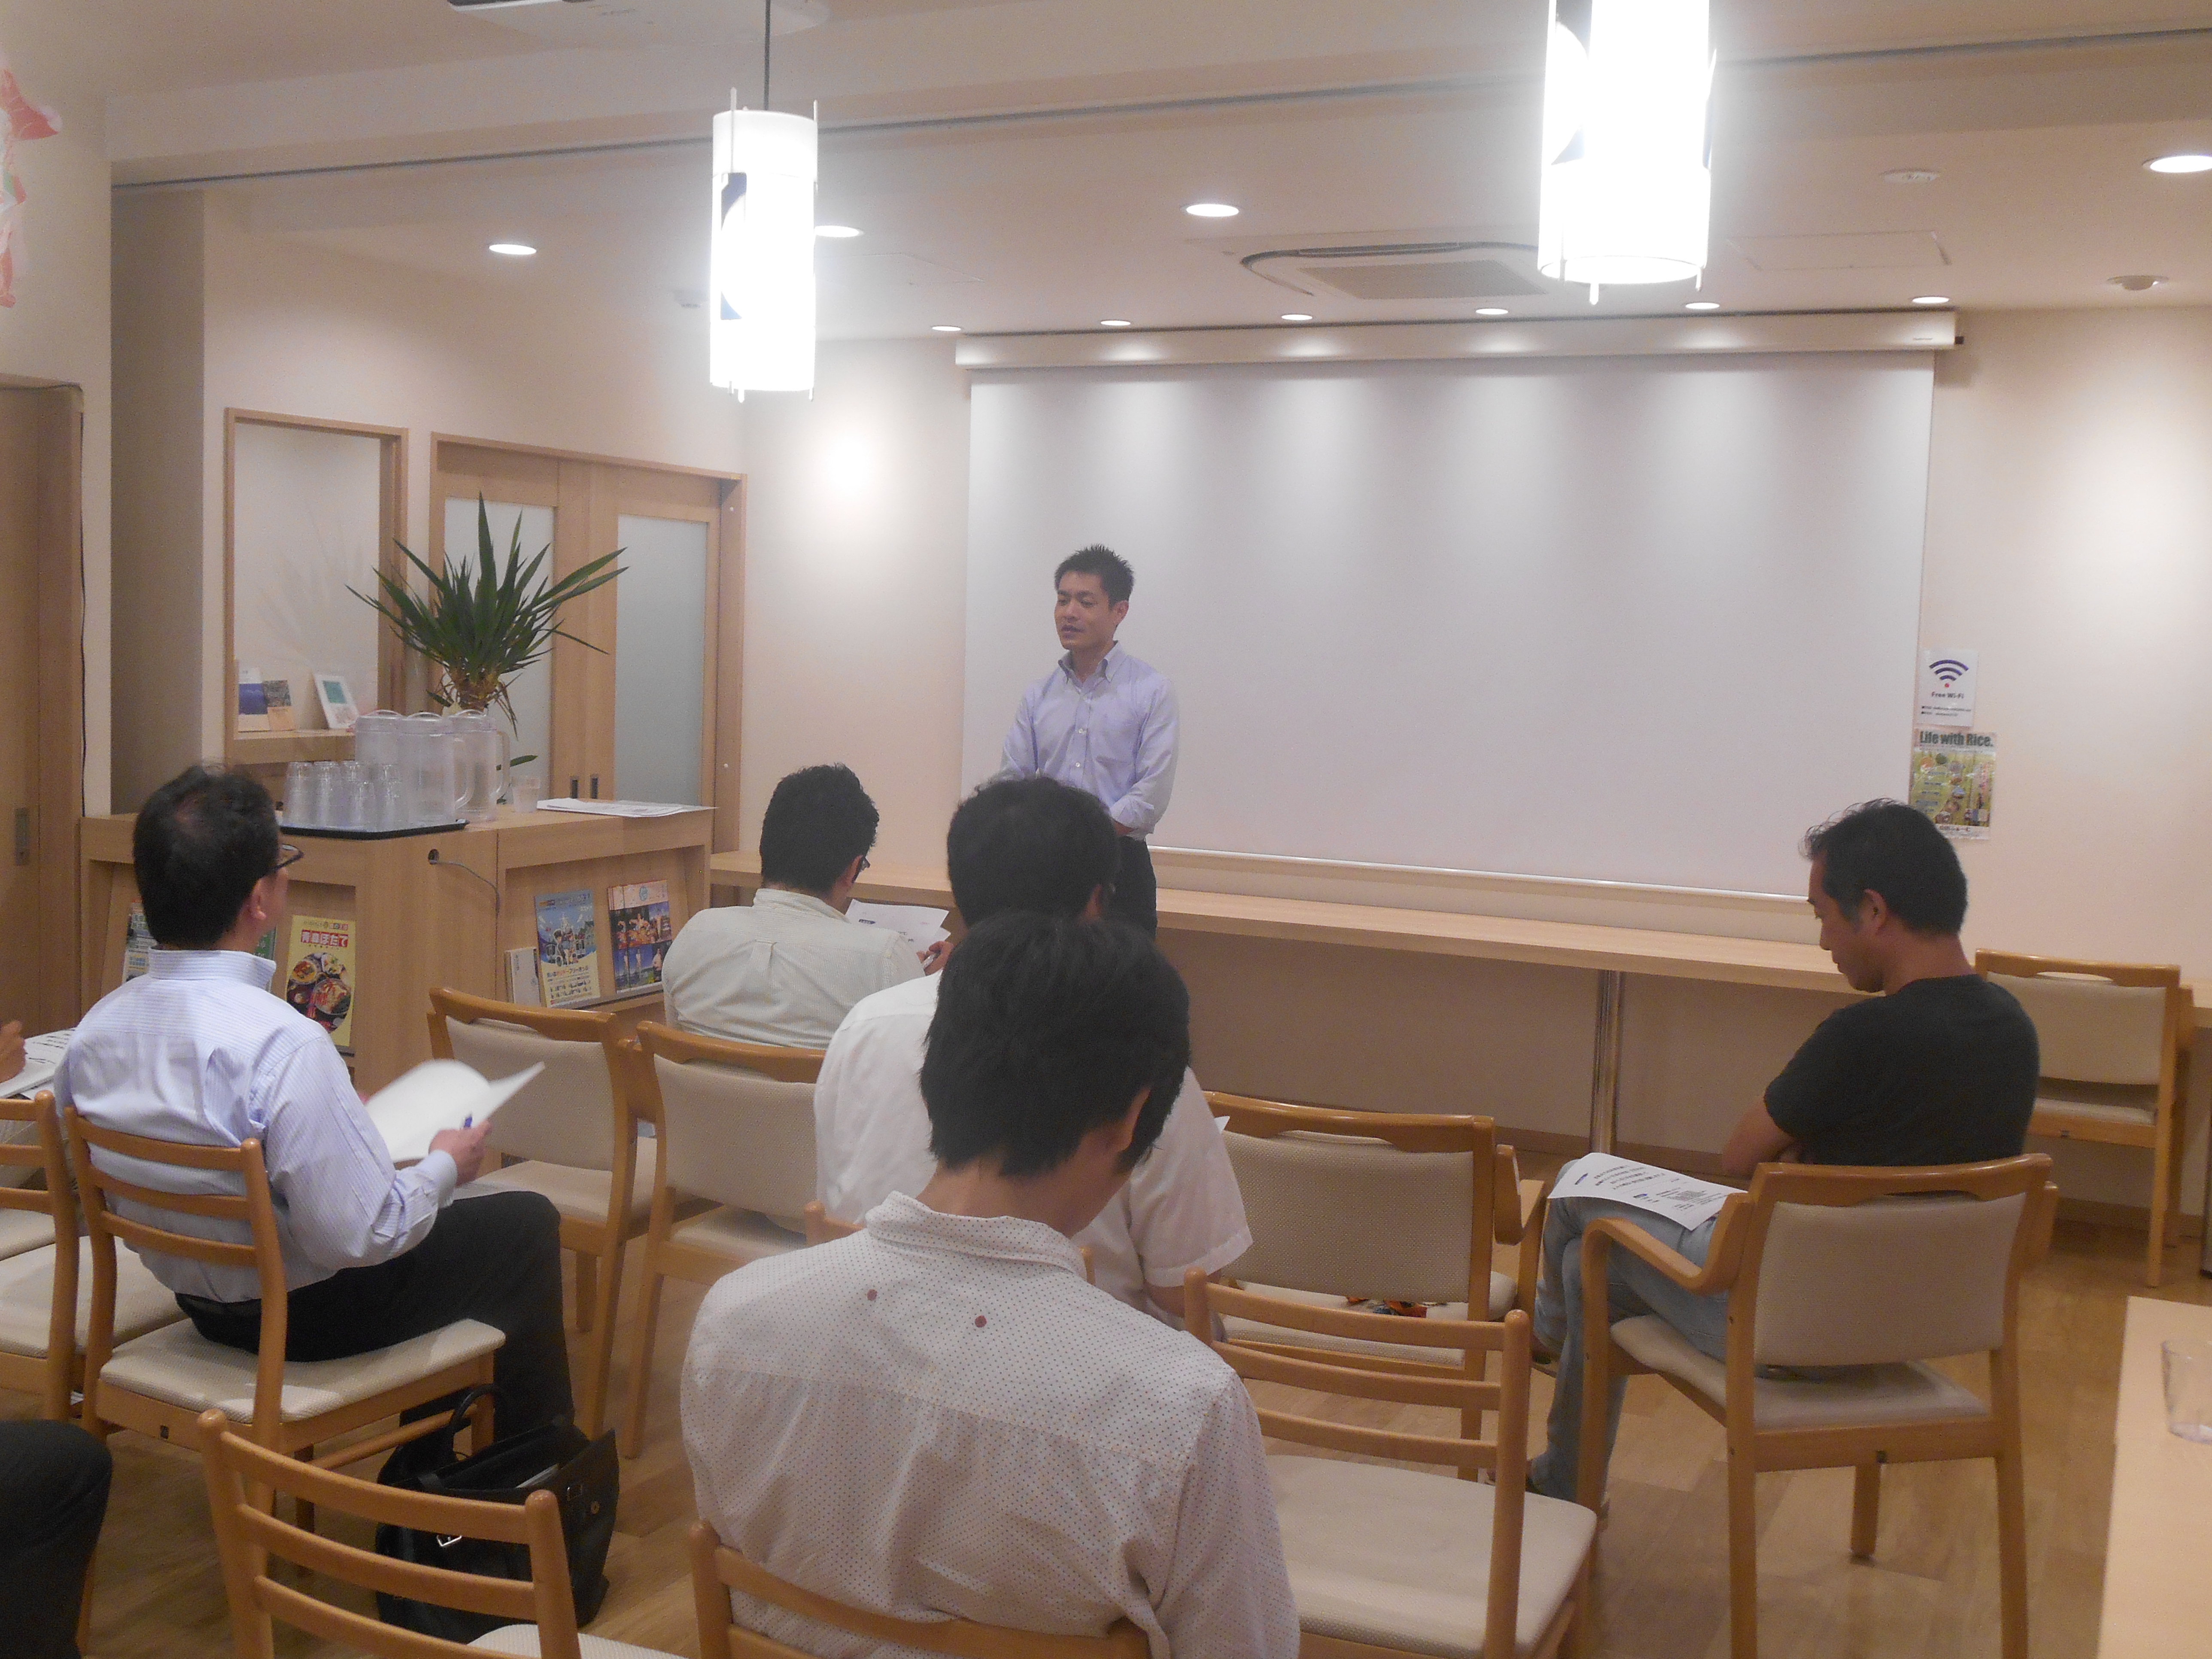 DSCN1887 - AoMoLink〜赤坂〜の第2回勉強会&交流会開催します。